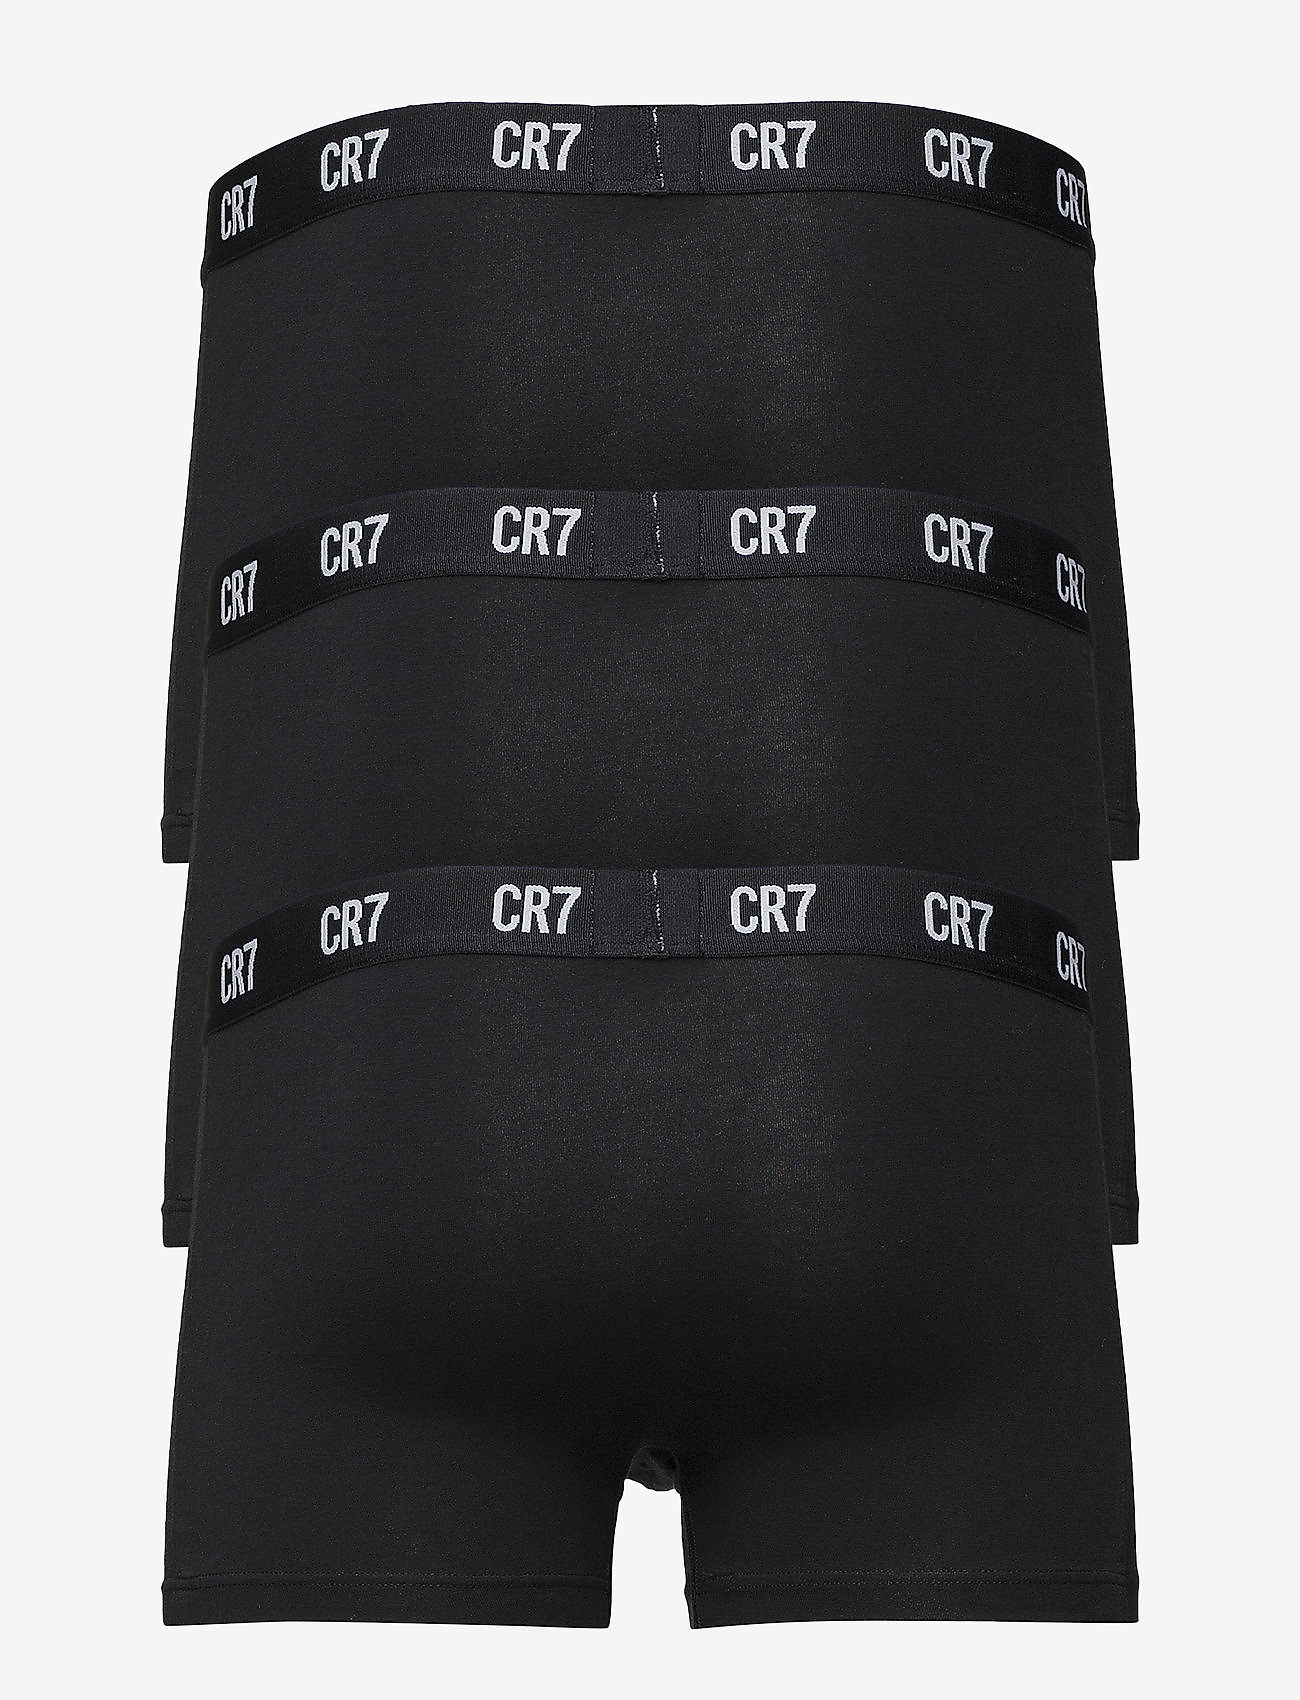 CR7 - CR7 Main Basic, Trunk,  3-pack - multipack underpants - black - 1